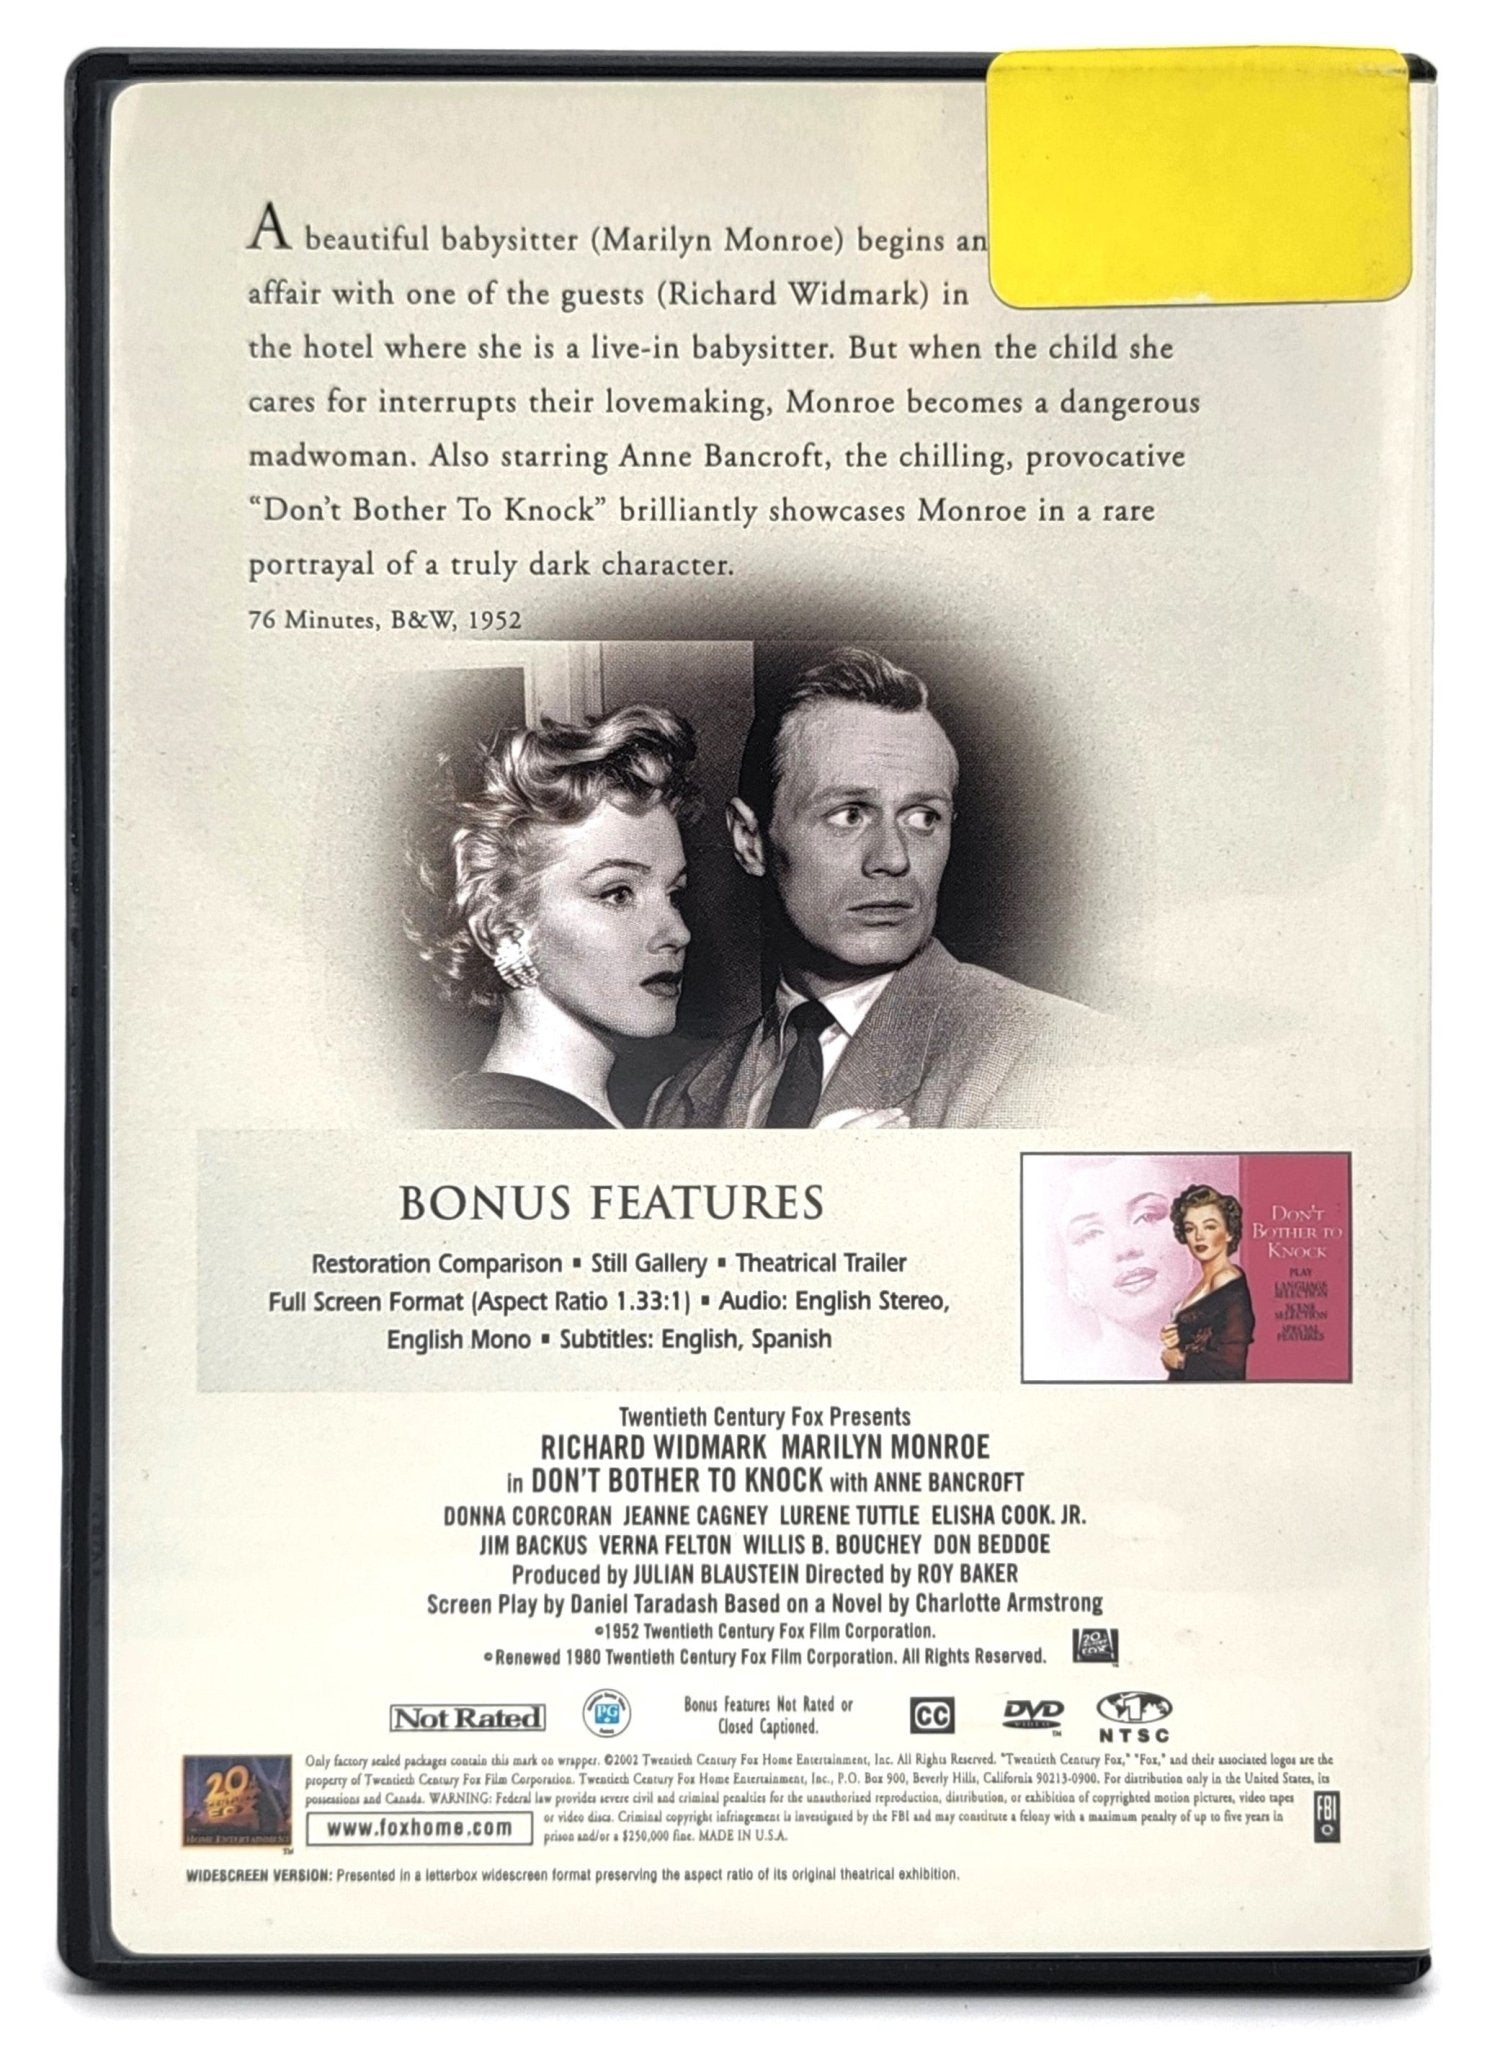 20th Century Fox Home Entertainment - Marilyn Monroe - The Diamond Collection Volume II | DVD - DVD - Steady Bunny Shop